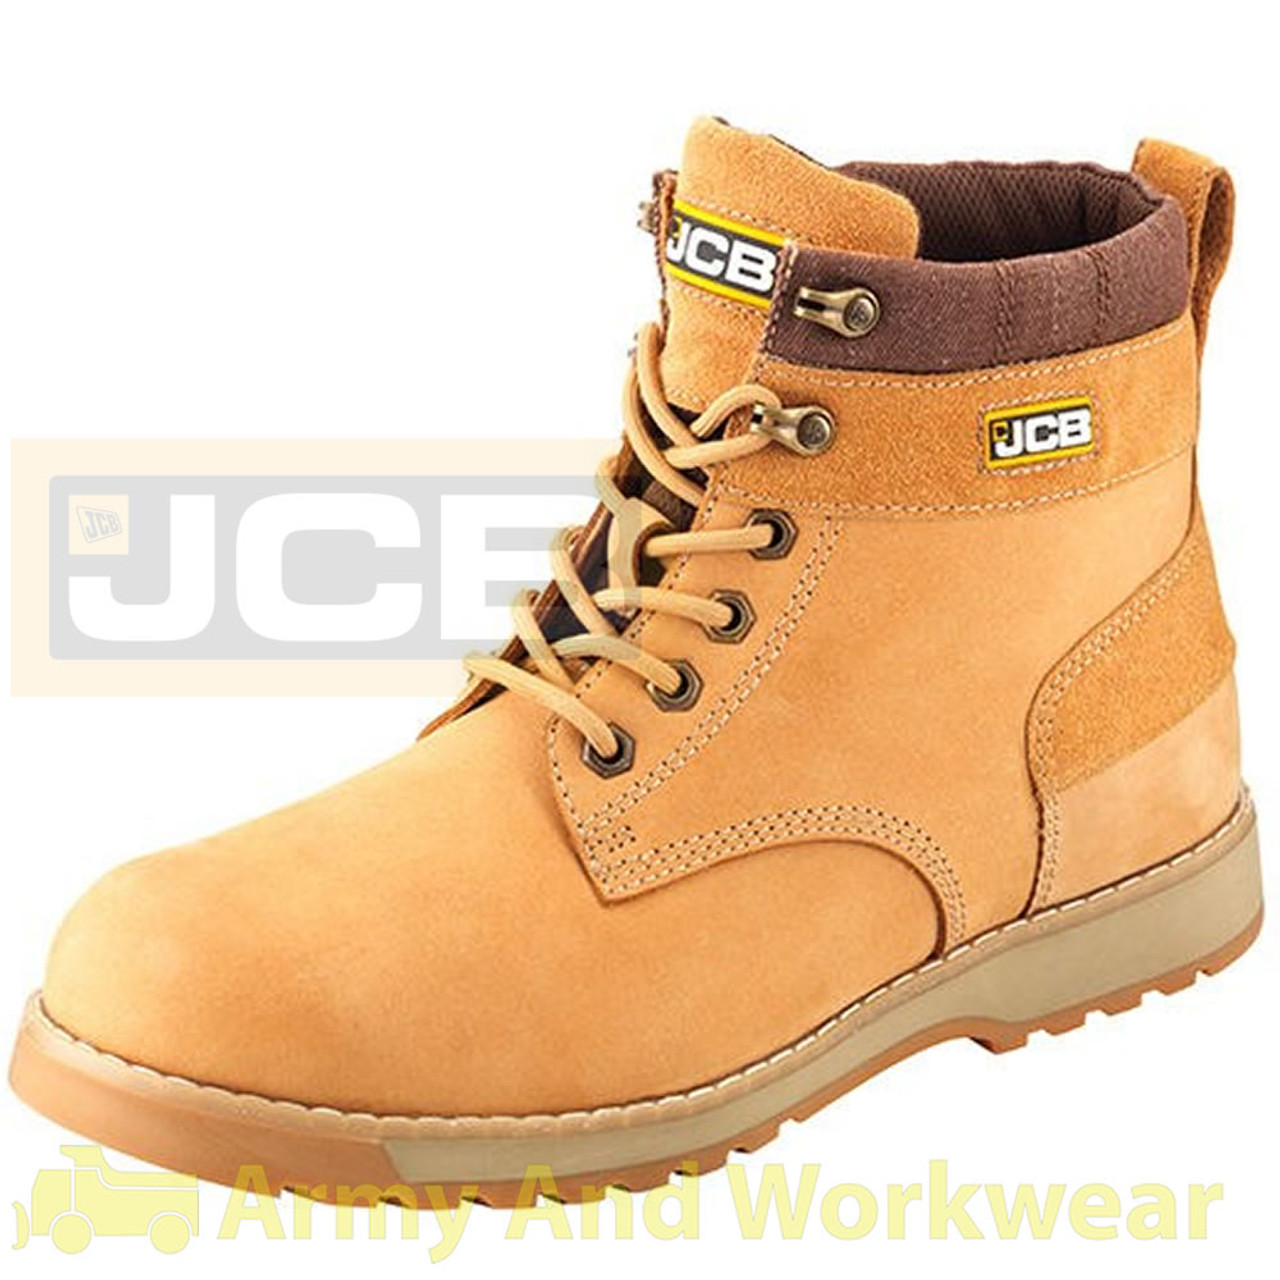 jcb boots